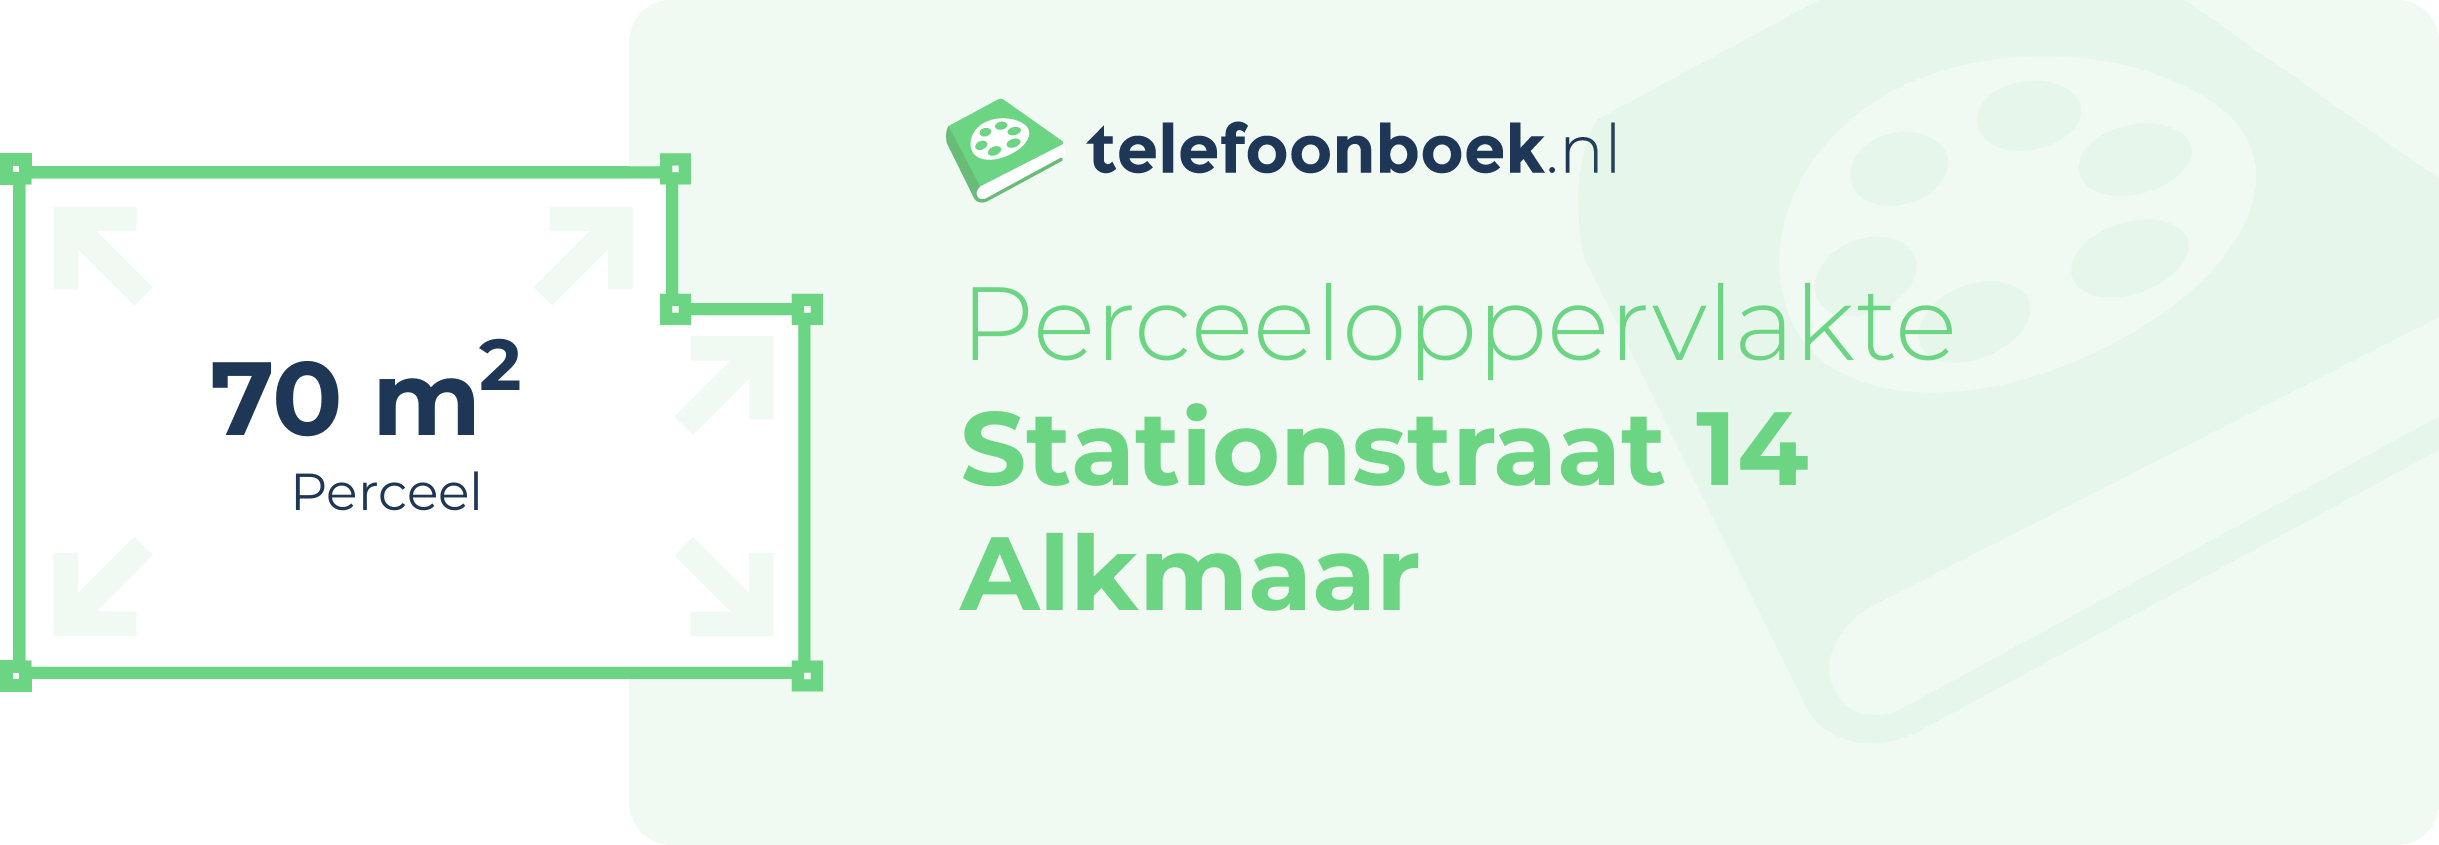 Perceeloppervlakte Stationstraat 14 Alkmaar